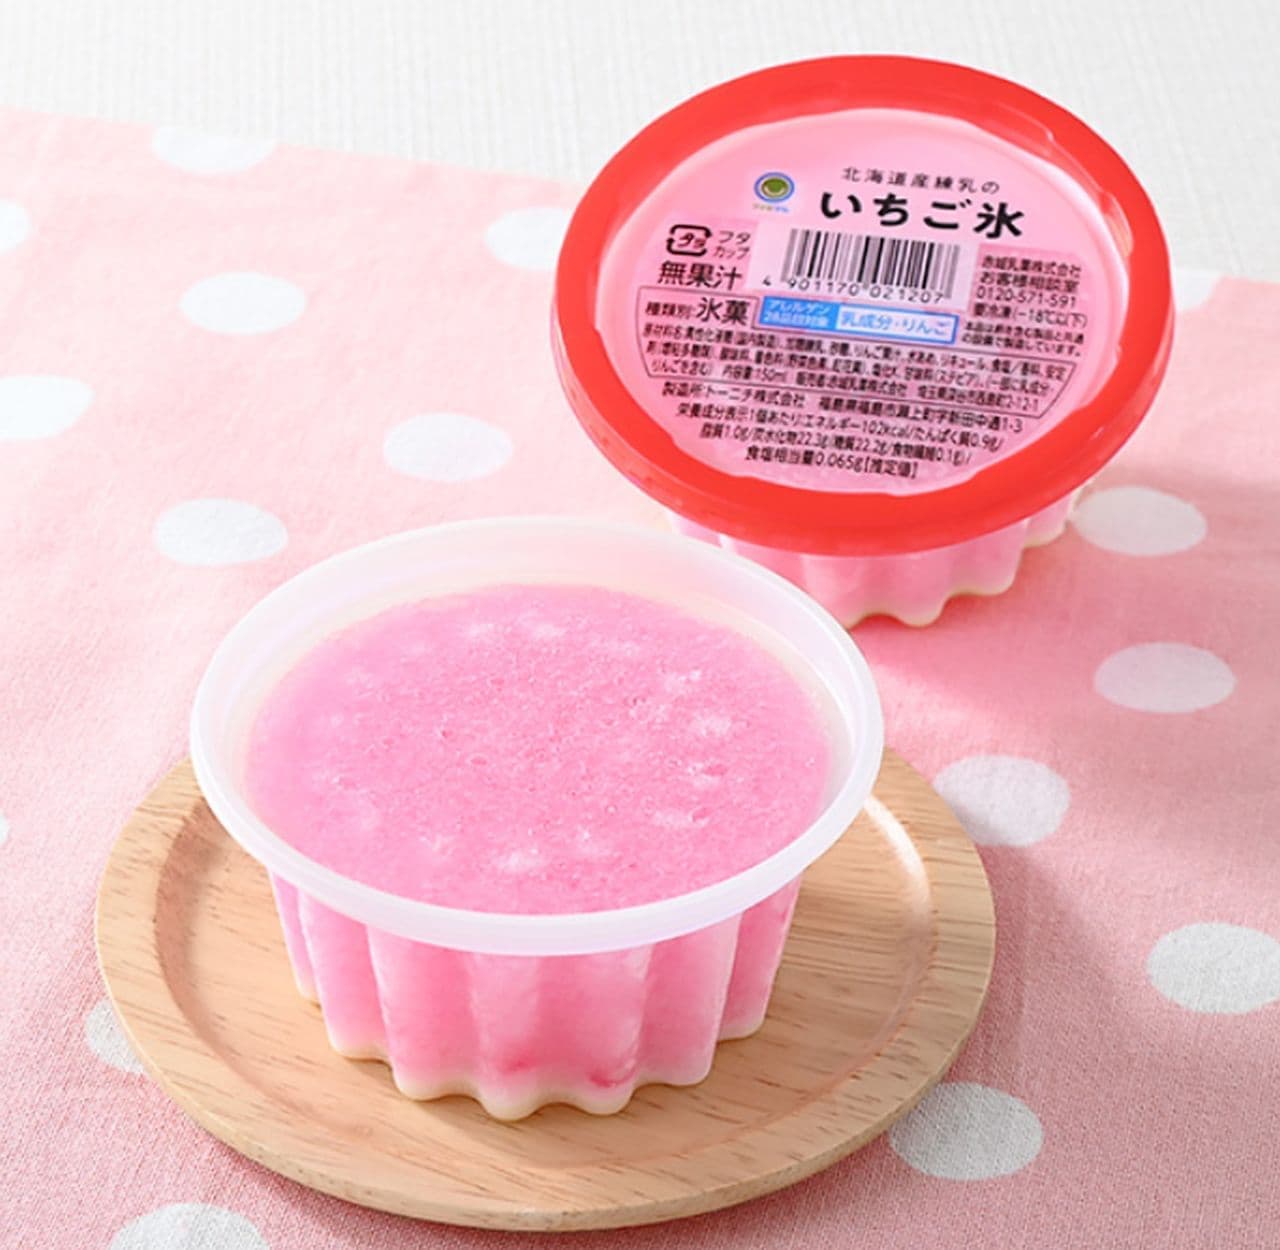 FamilyMart "Strawberry Ice with Hokkaido Condensed Milk